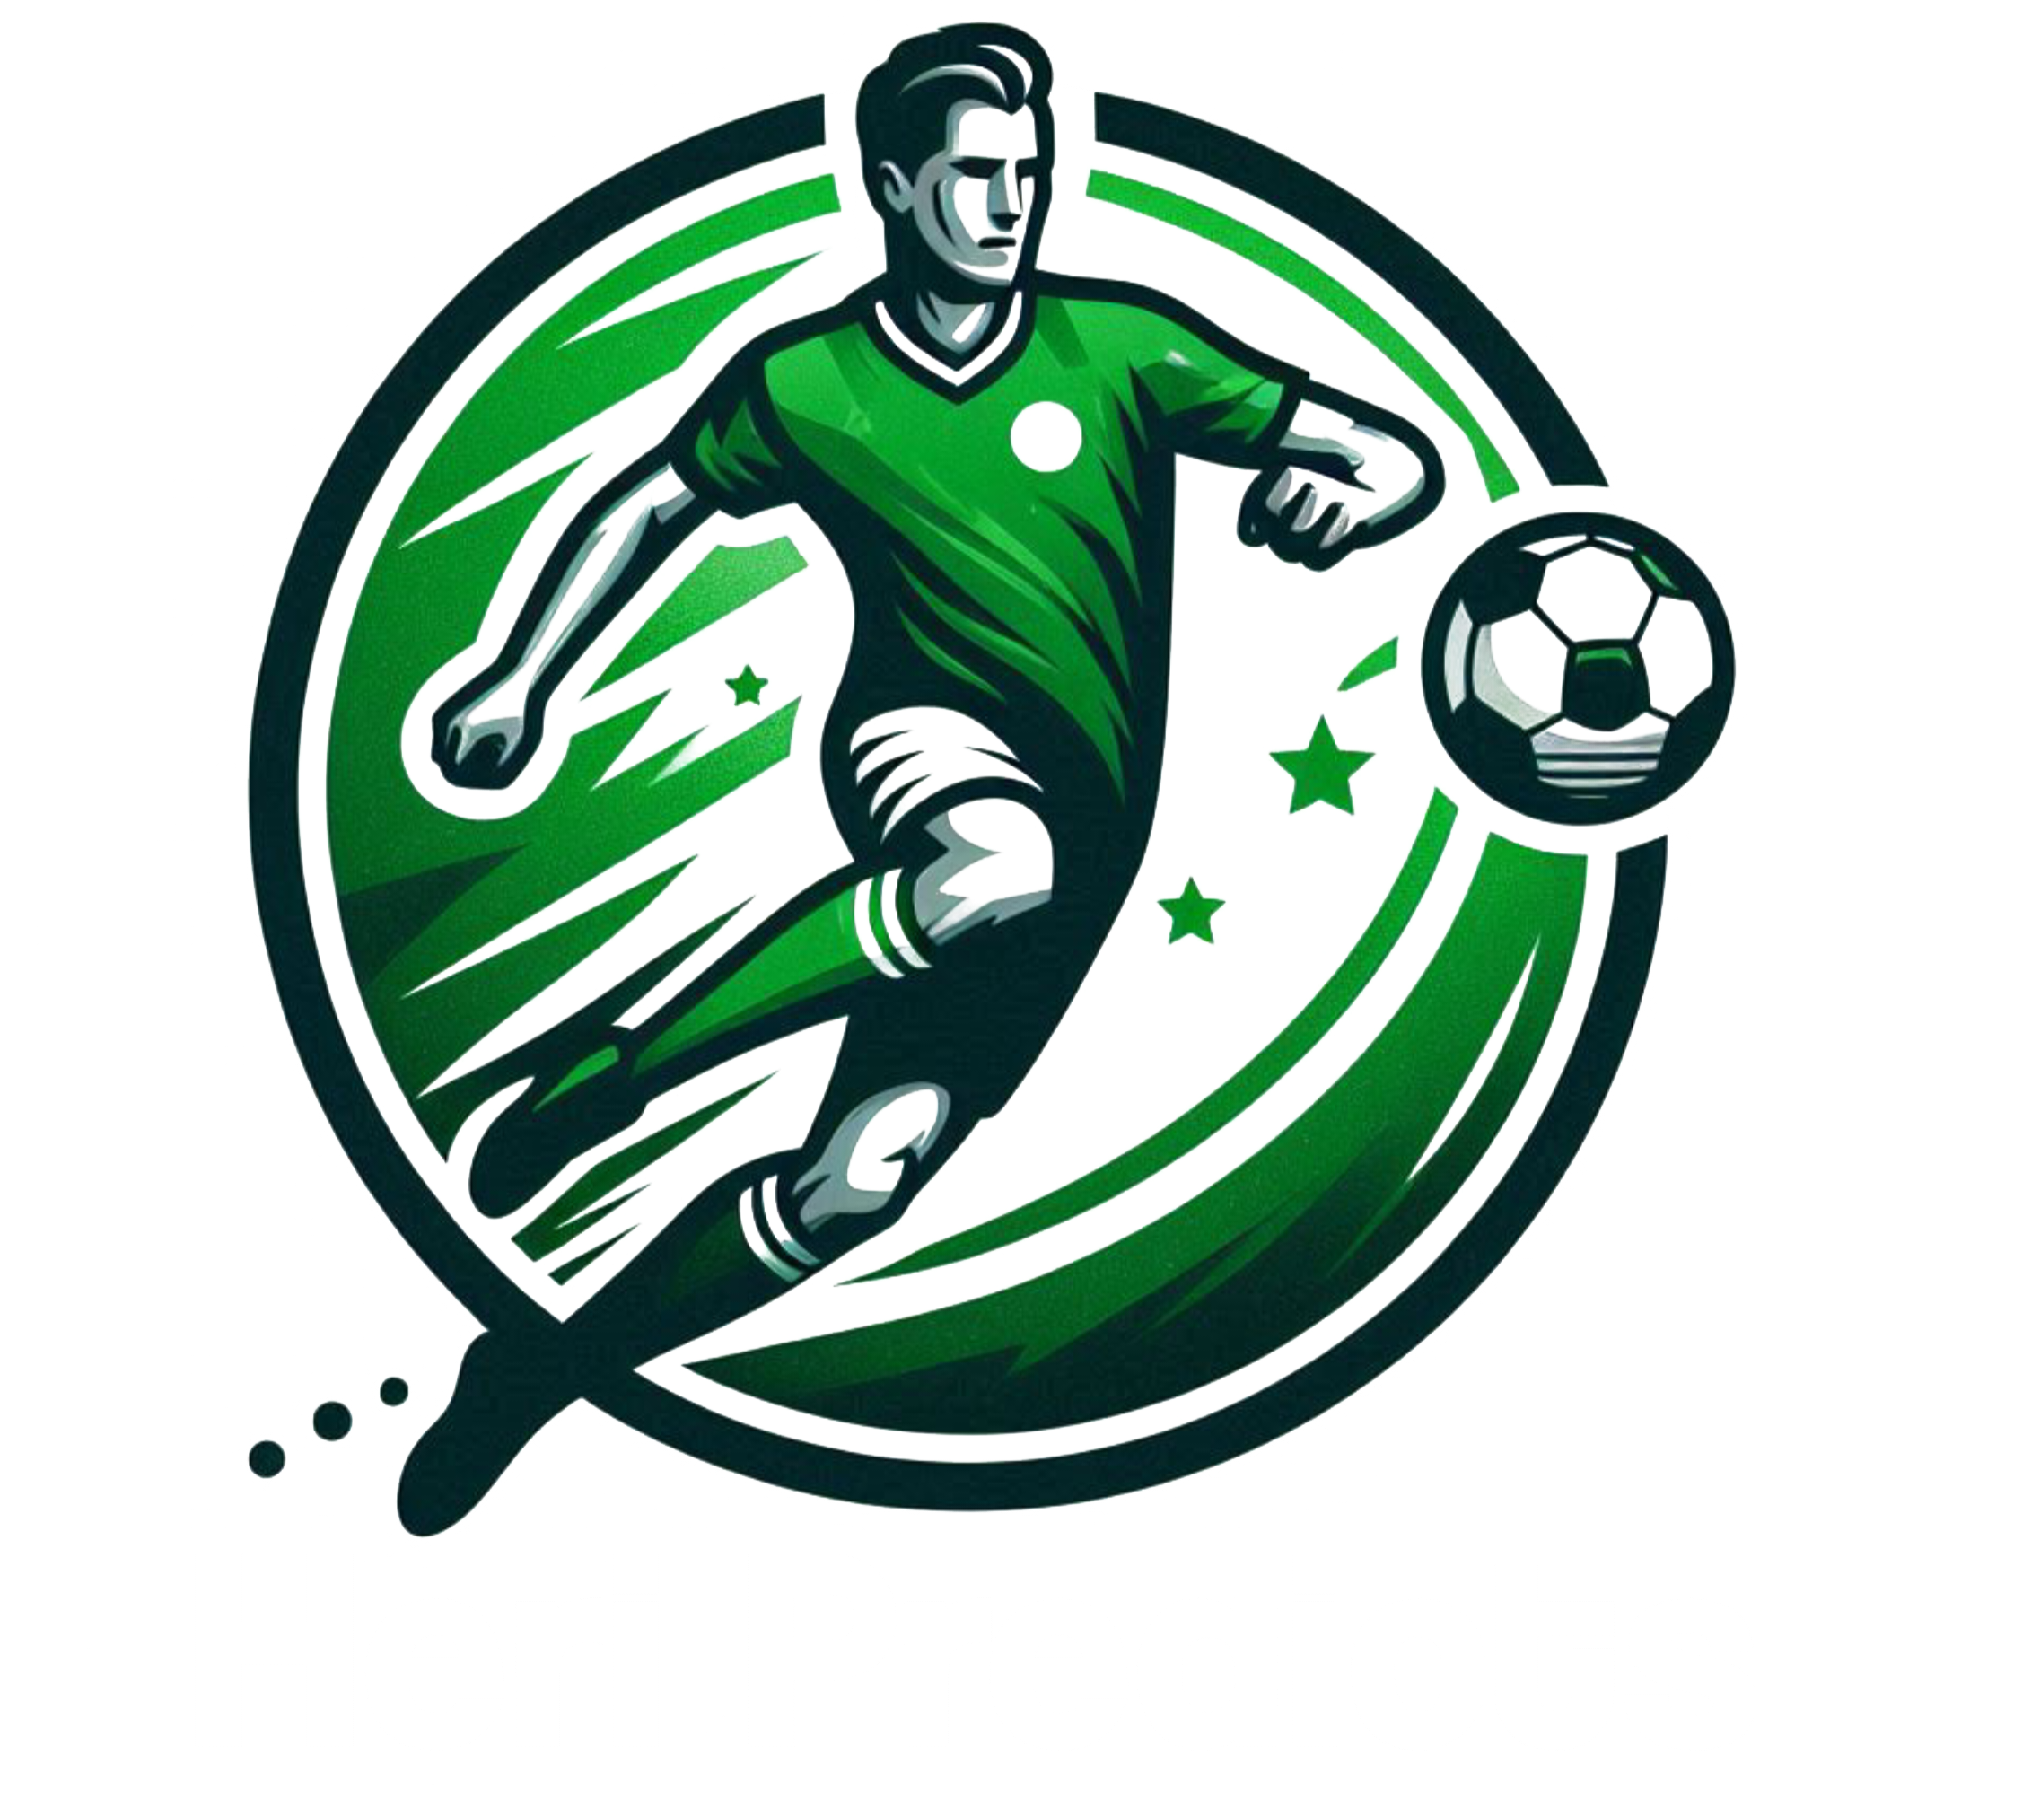 Heri Predicts